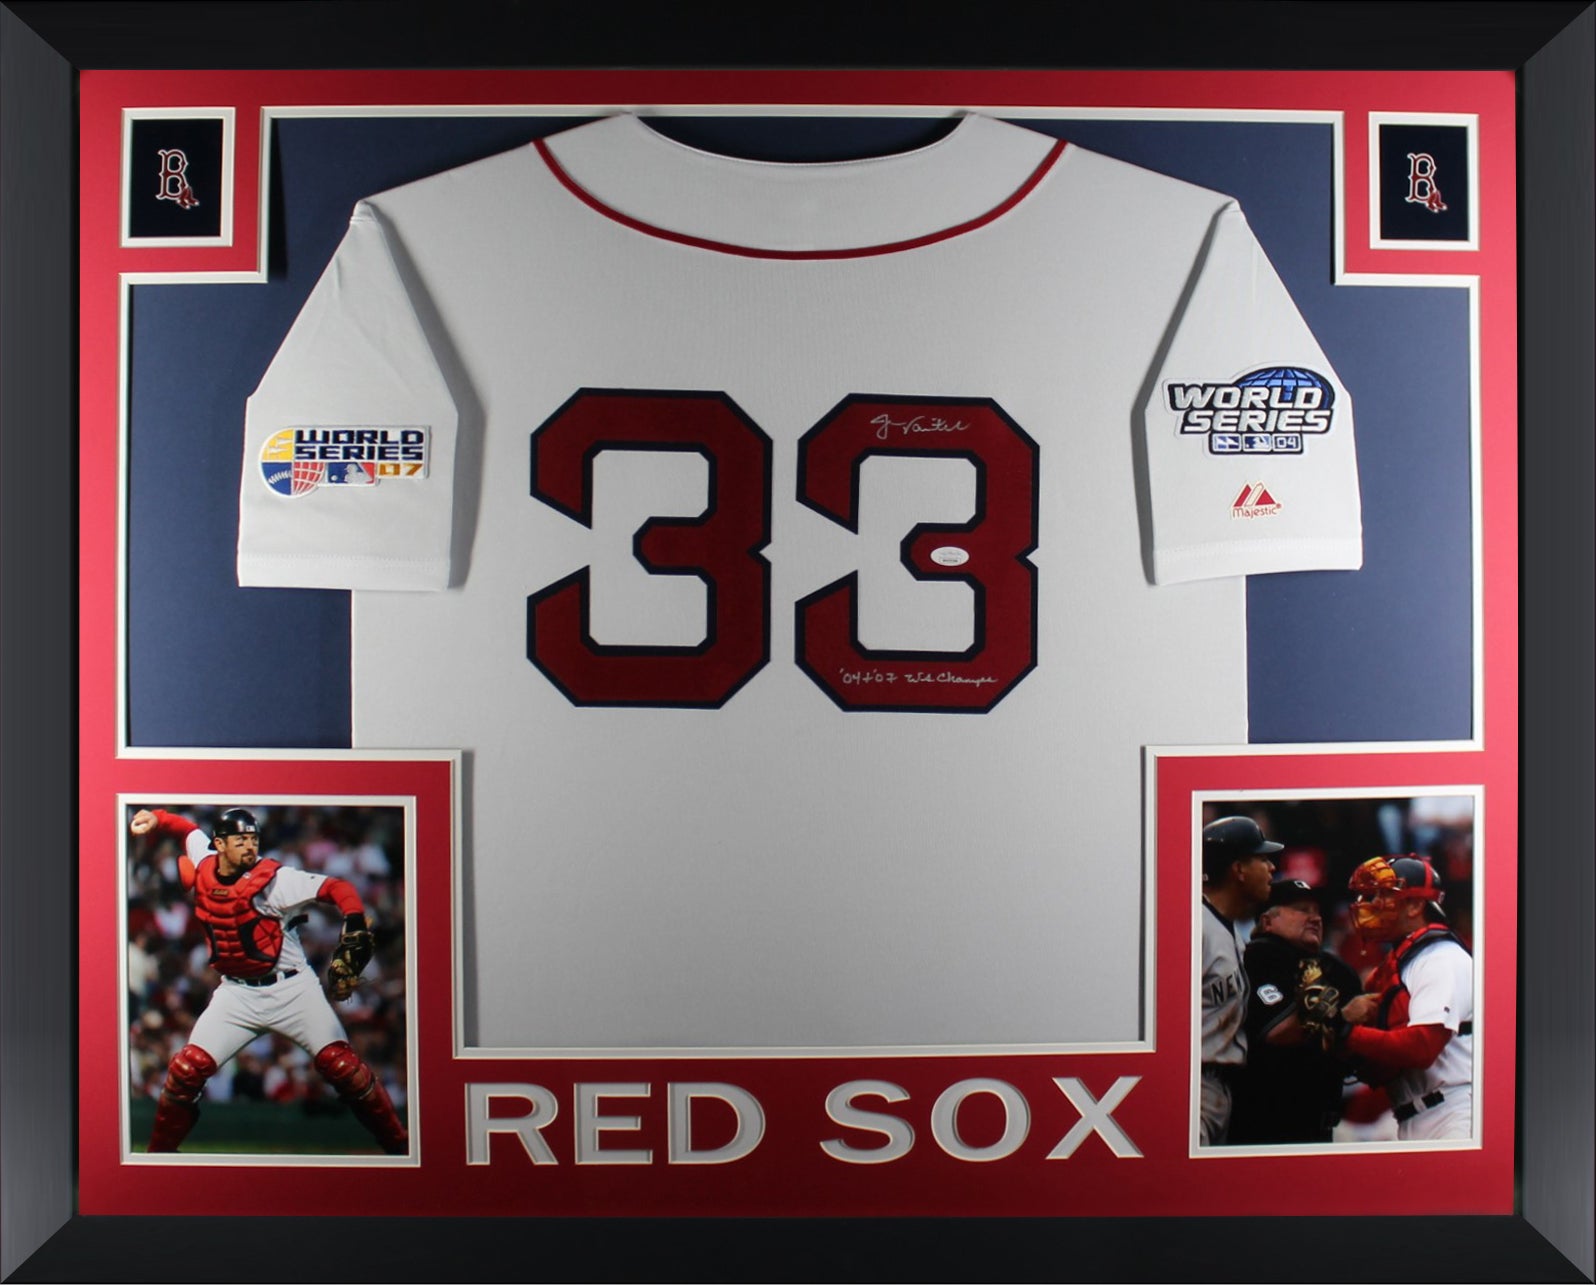 Carlton Fisk Autographed Boston Red Sox Gray Baseball Jersey - JSA